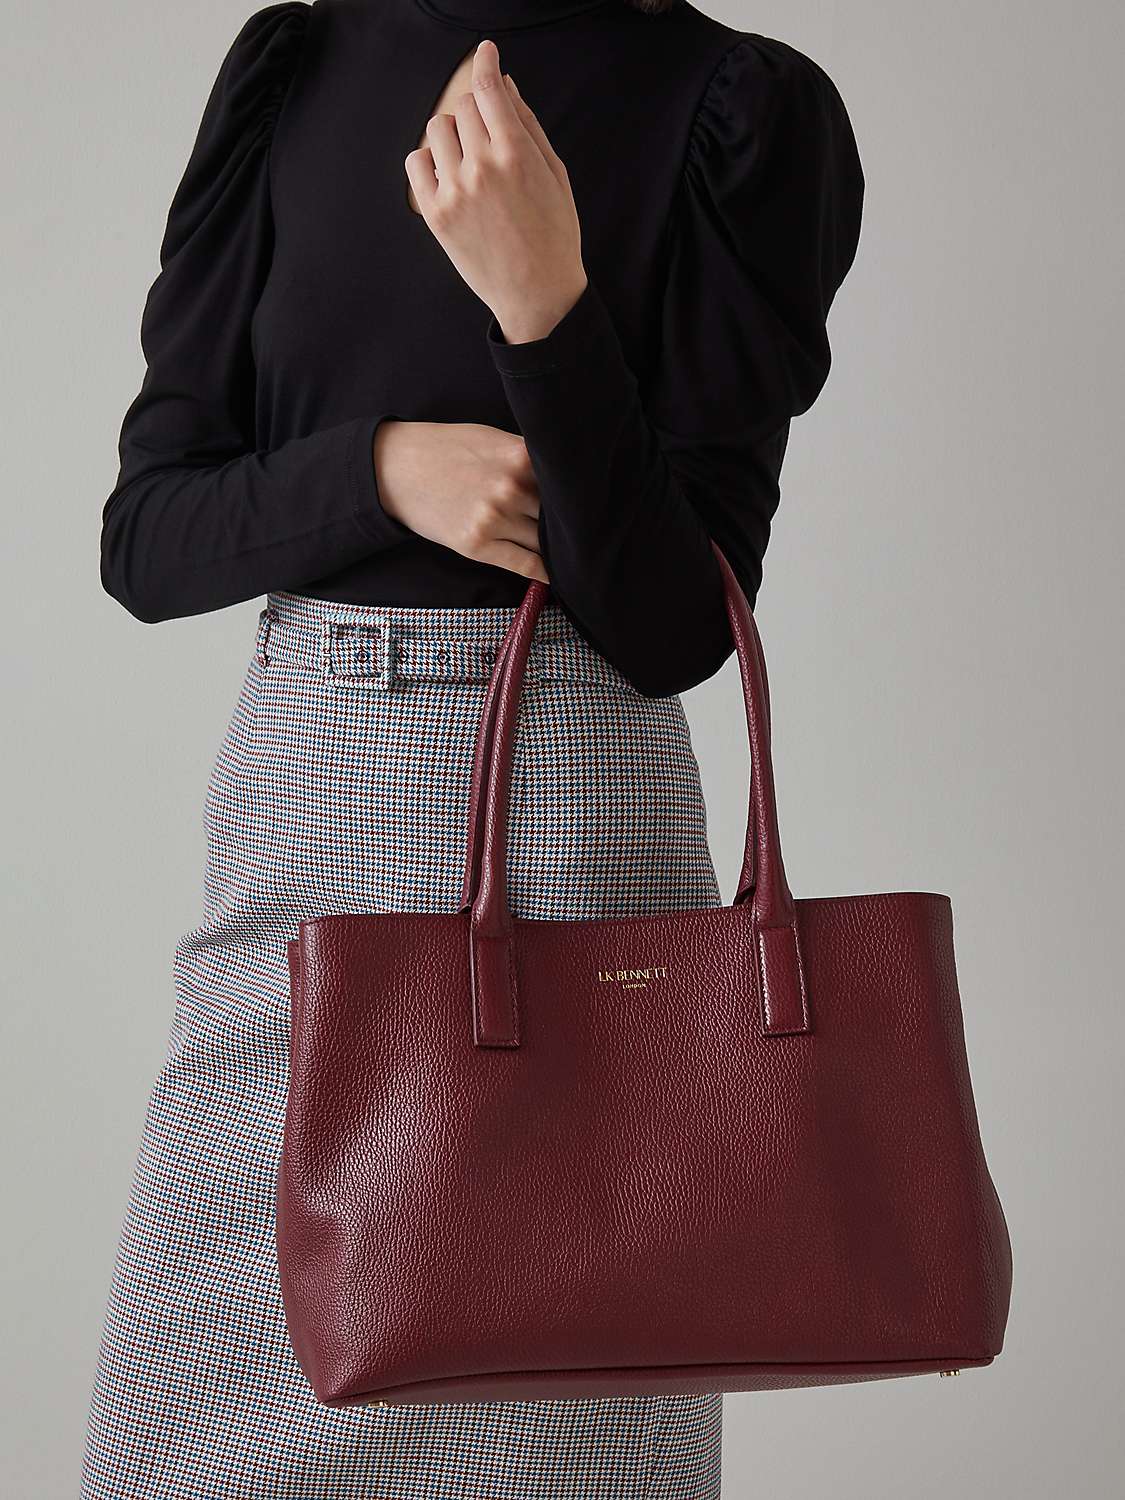 L.K.Bennett Lilian Leather Tote Bag, Burgundy at John Lewis & Partners